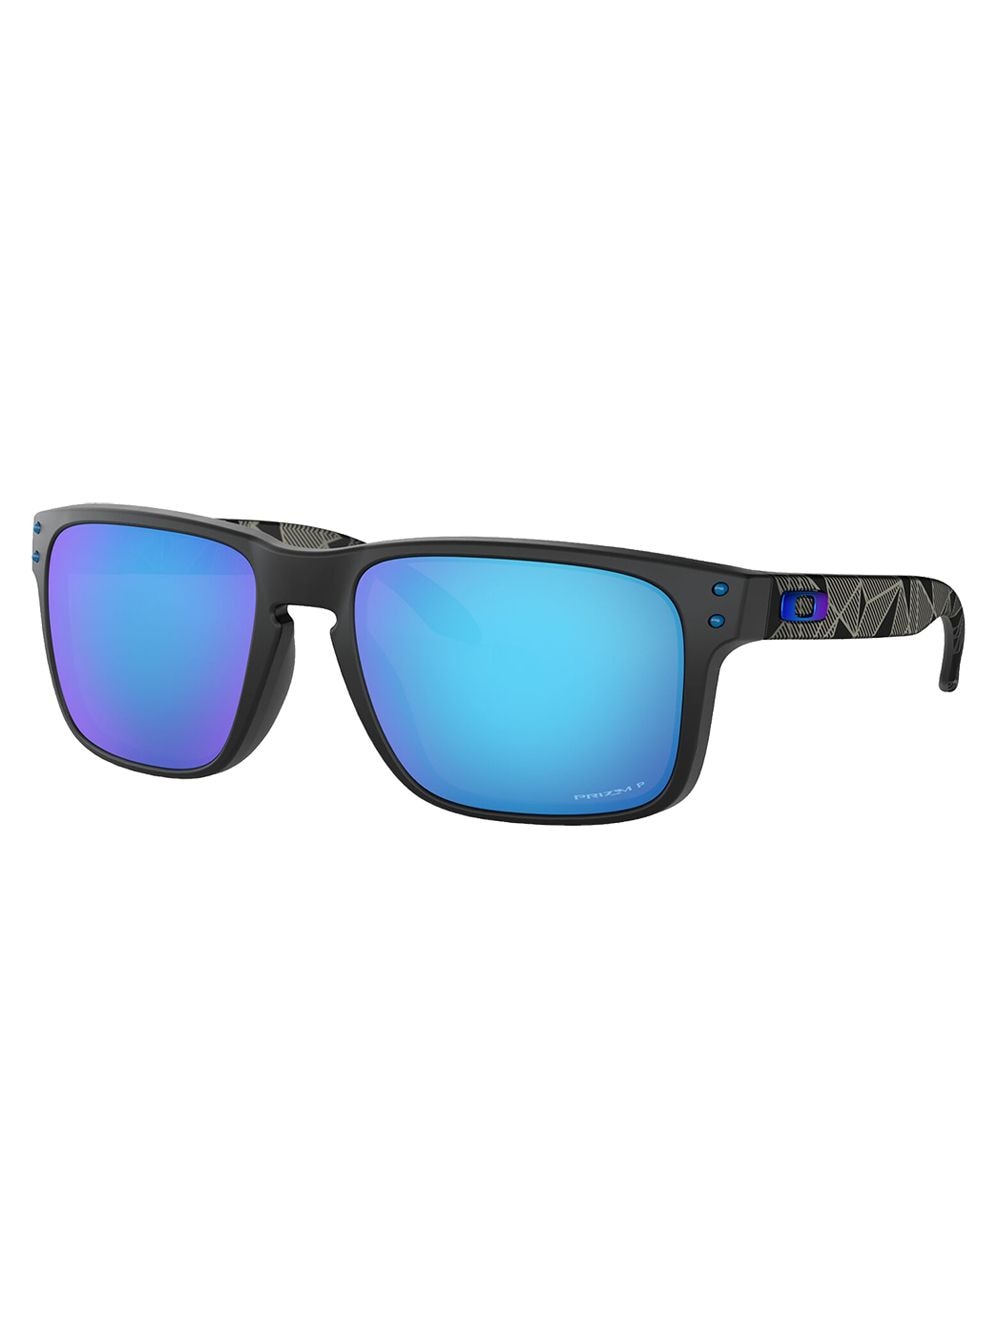 Black OO9102 square-frame sunglasses